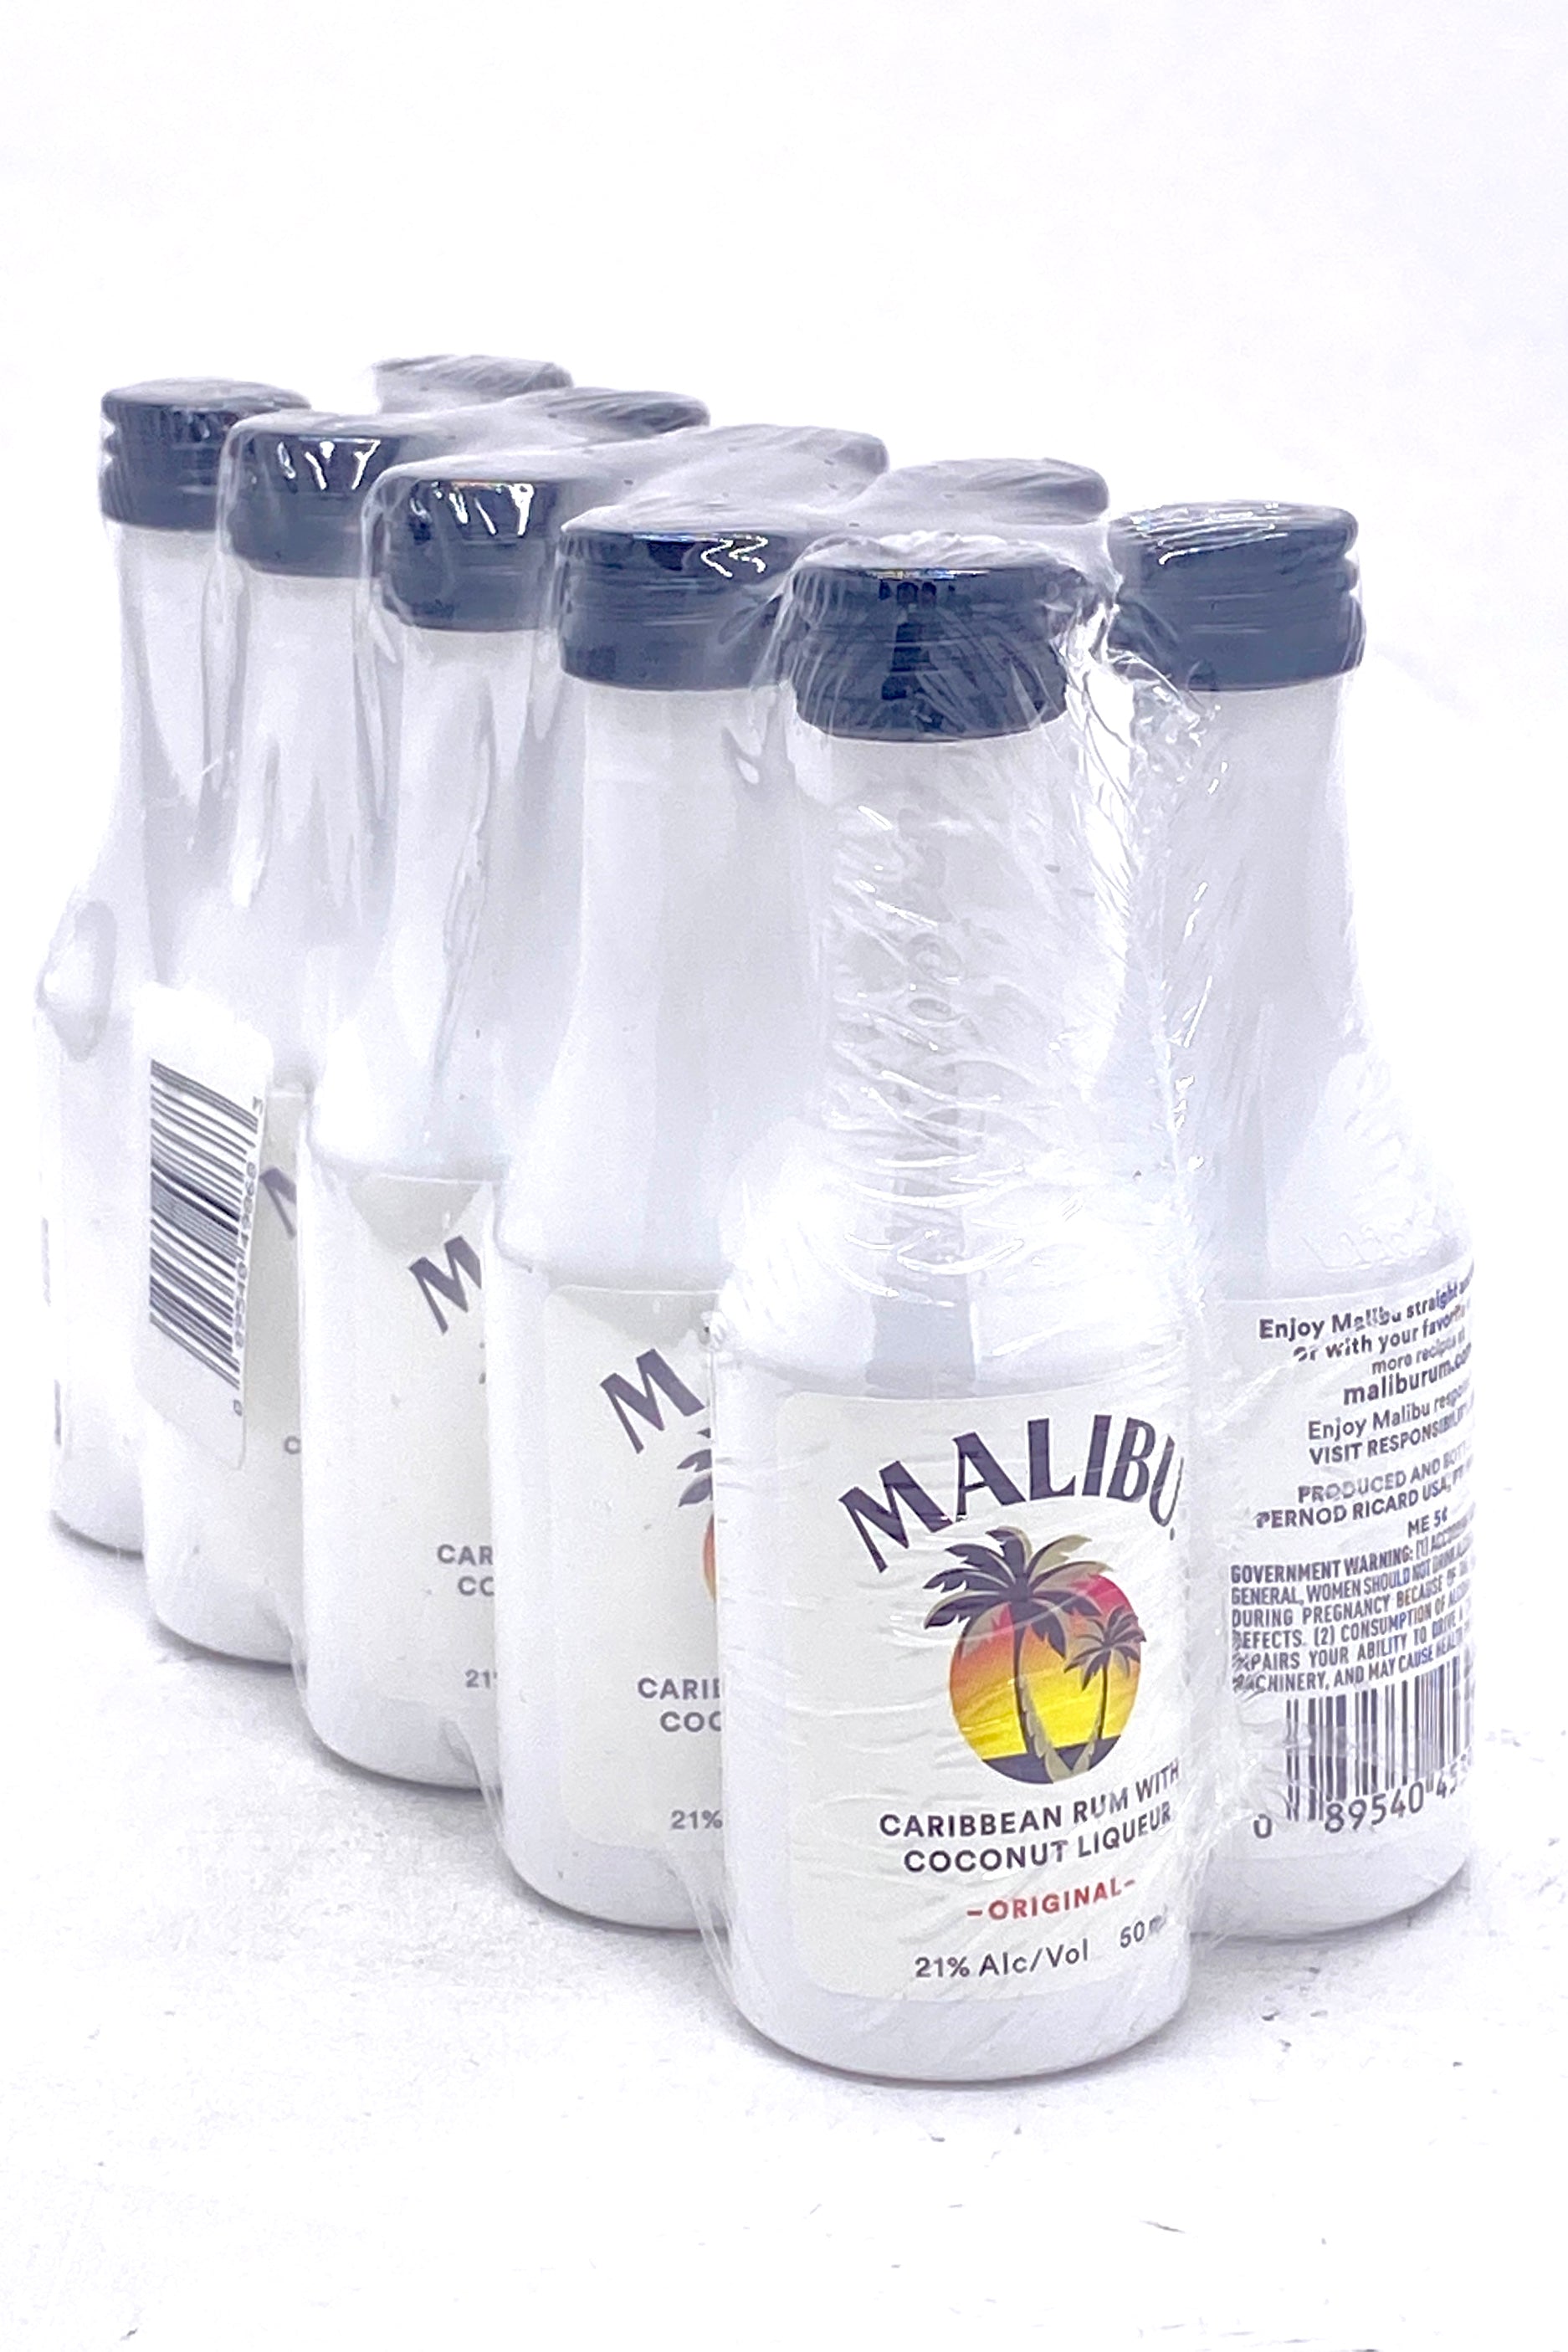 Coconut Rum - Malibu Original - Malibu Drinks